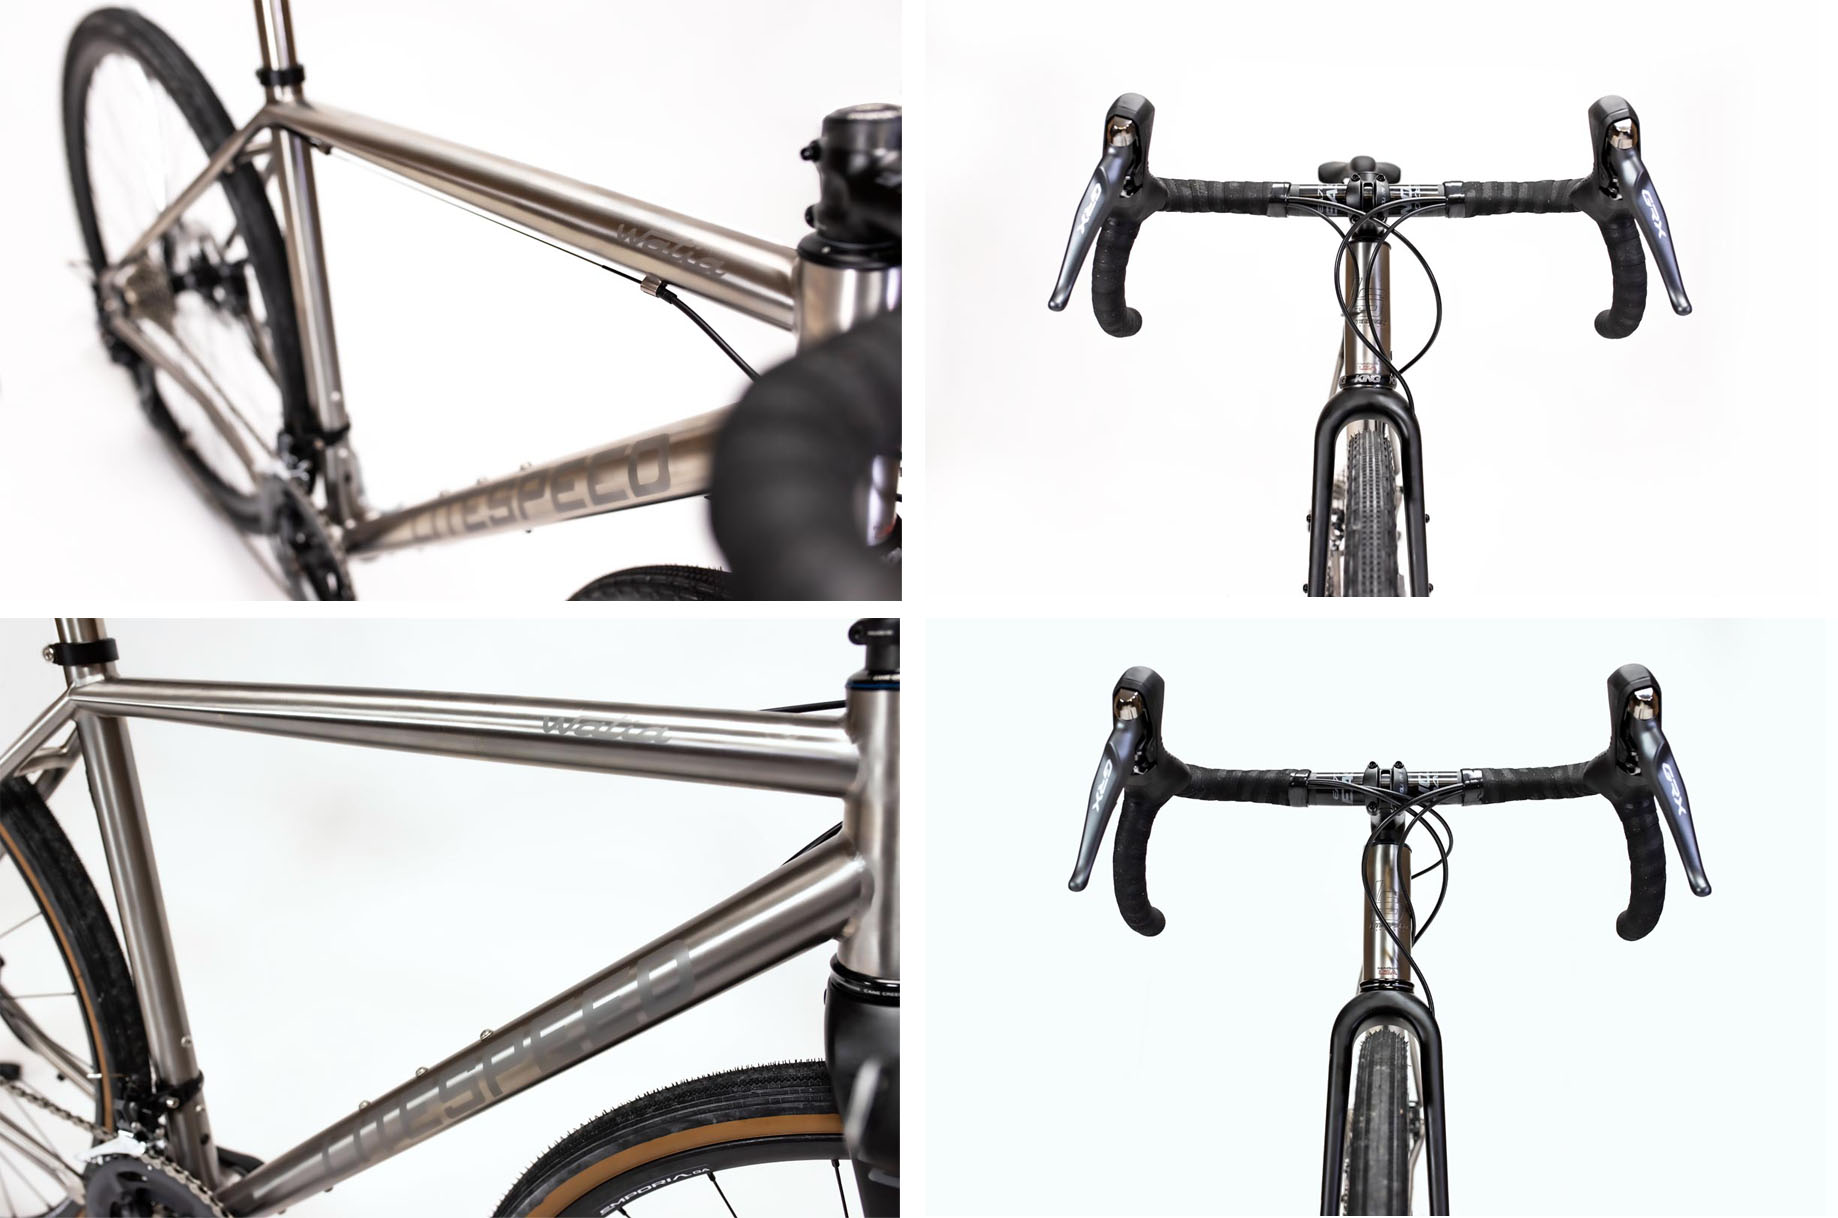  Litespeed Watia titanium gravel bike internal vs external routing